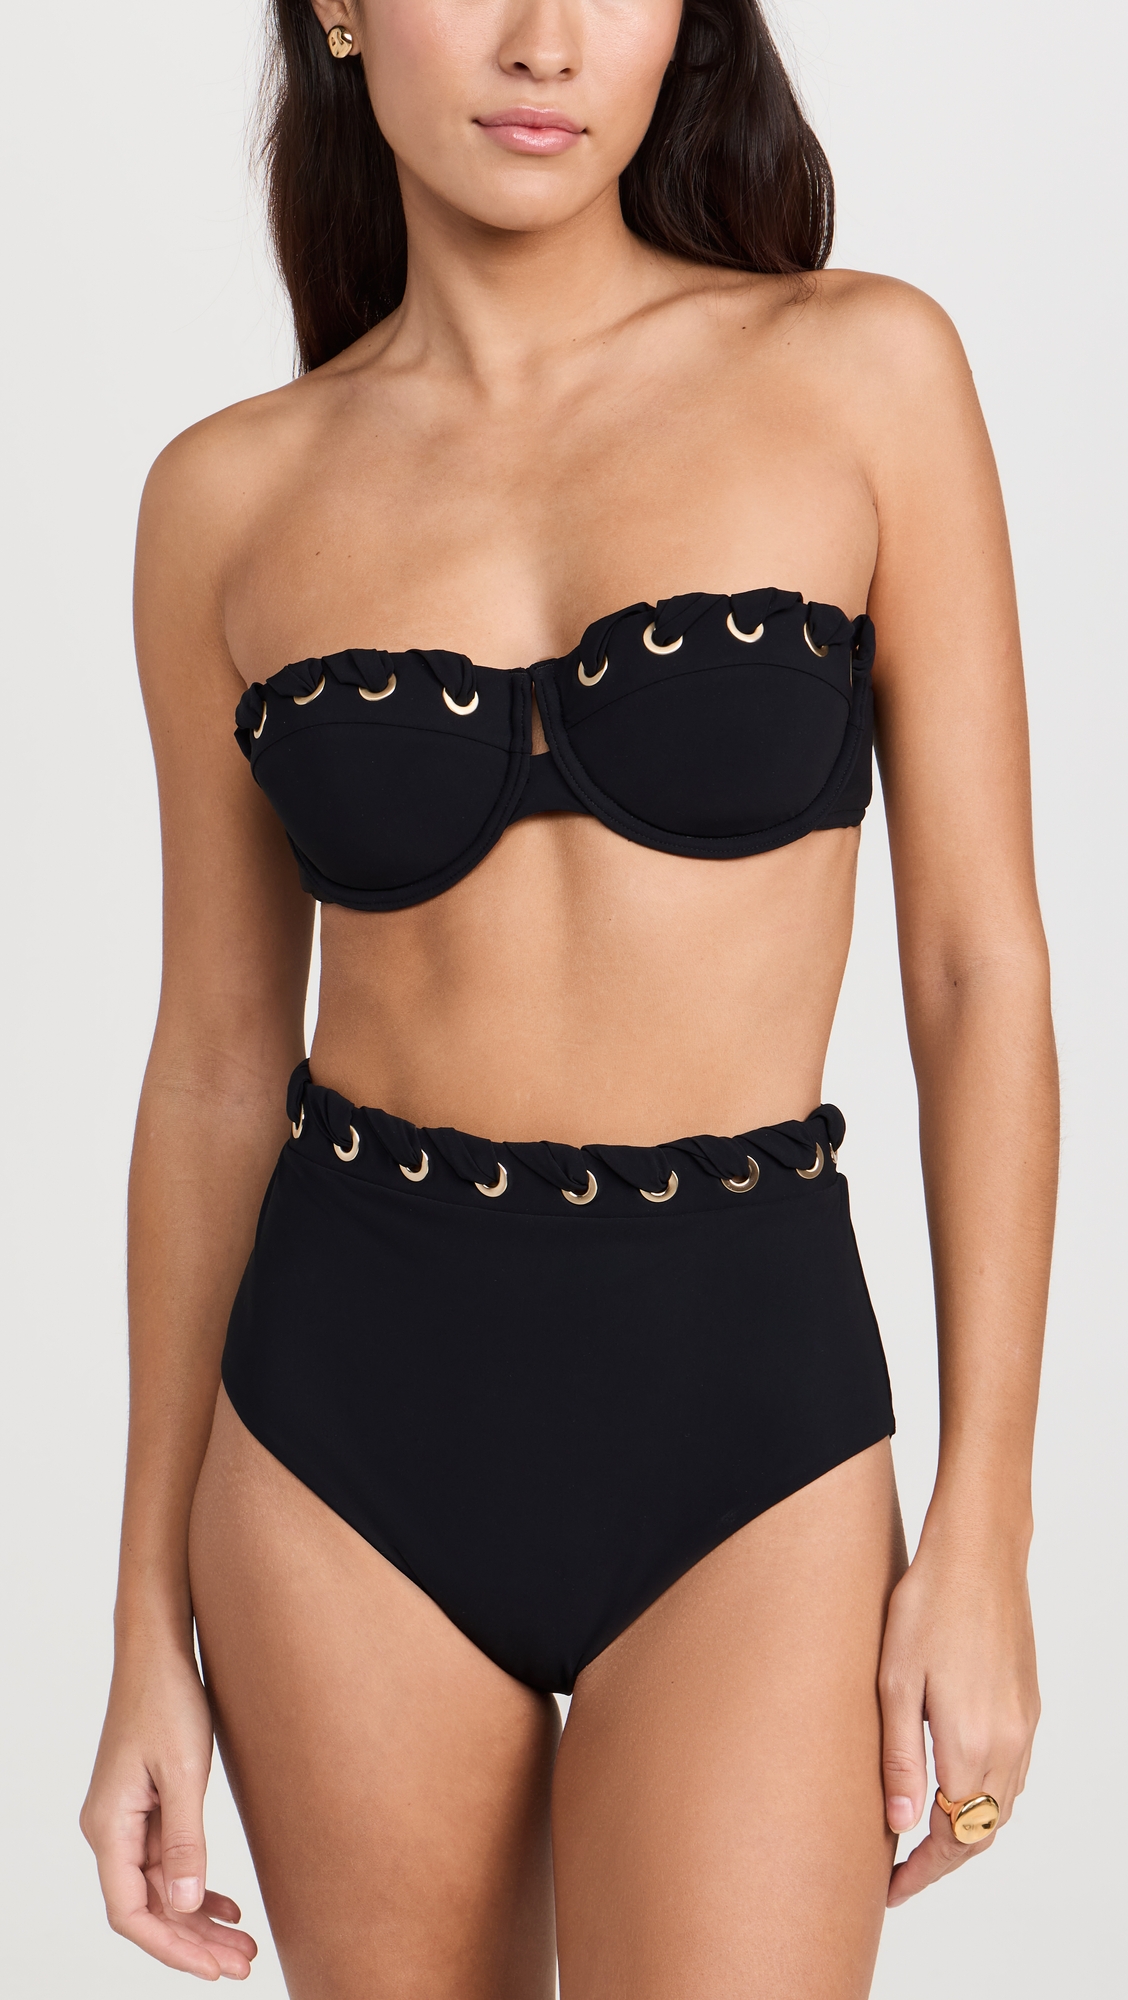 a model wears a black balconette bikini top with high-rise matching bottoms